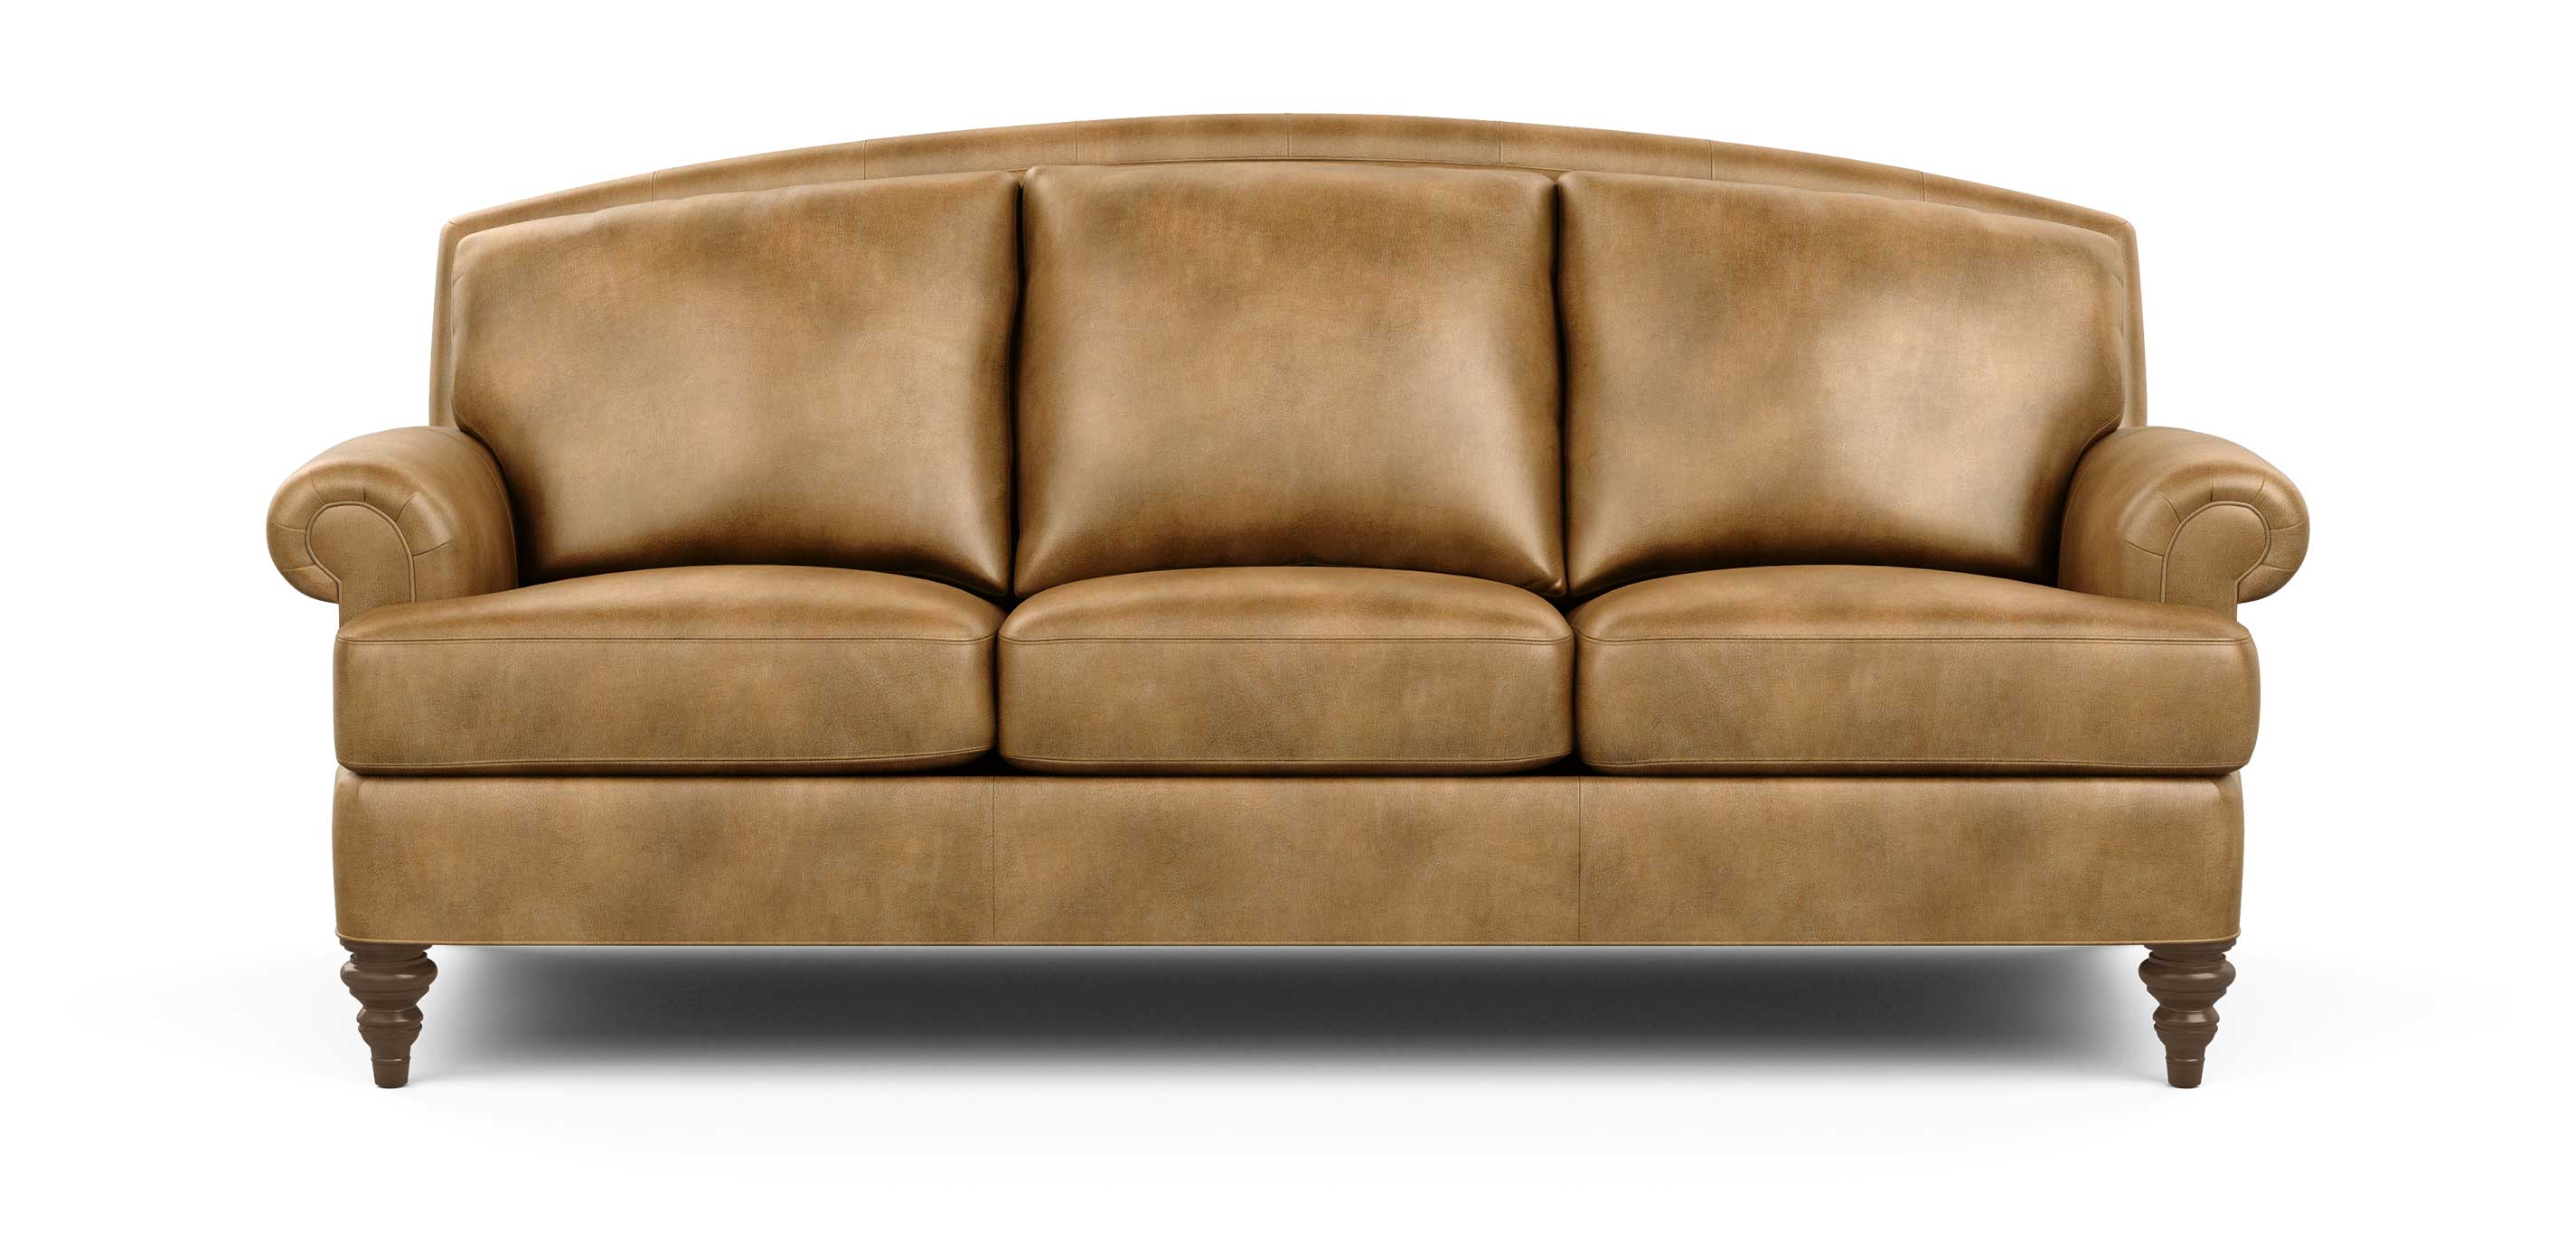 hyde park leather sofa